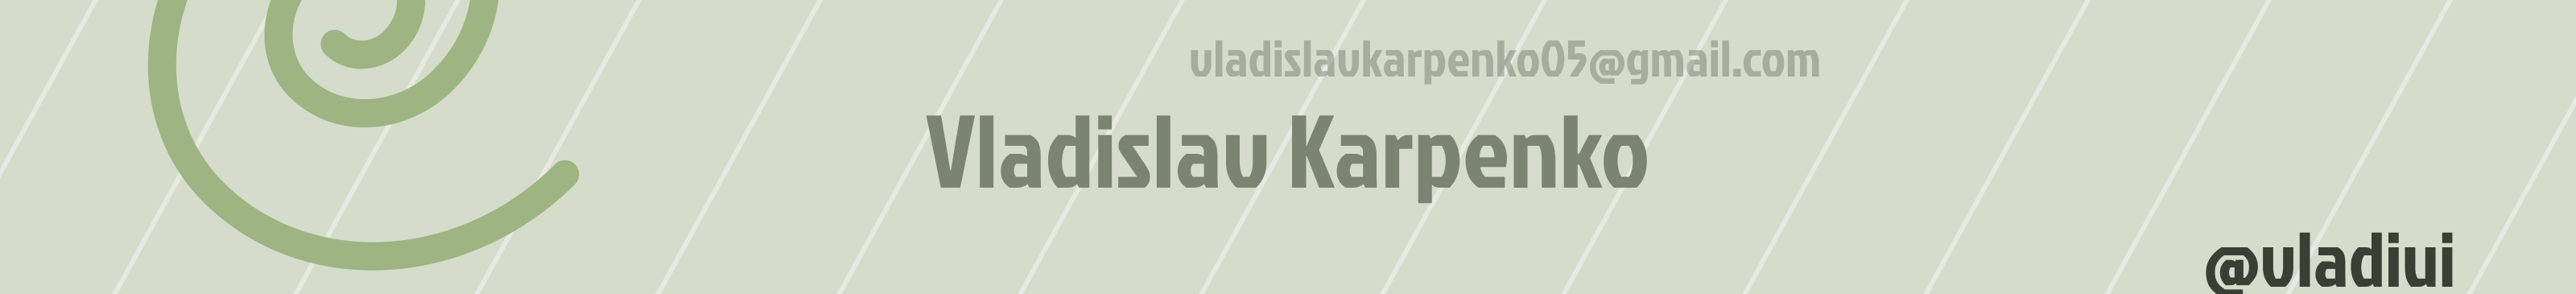 Vladislav Karpenko's profile banner